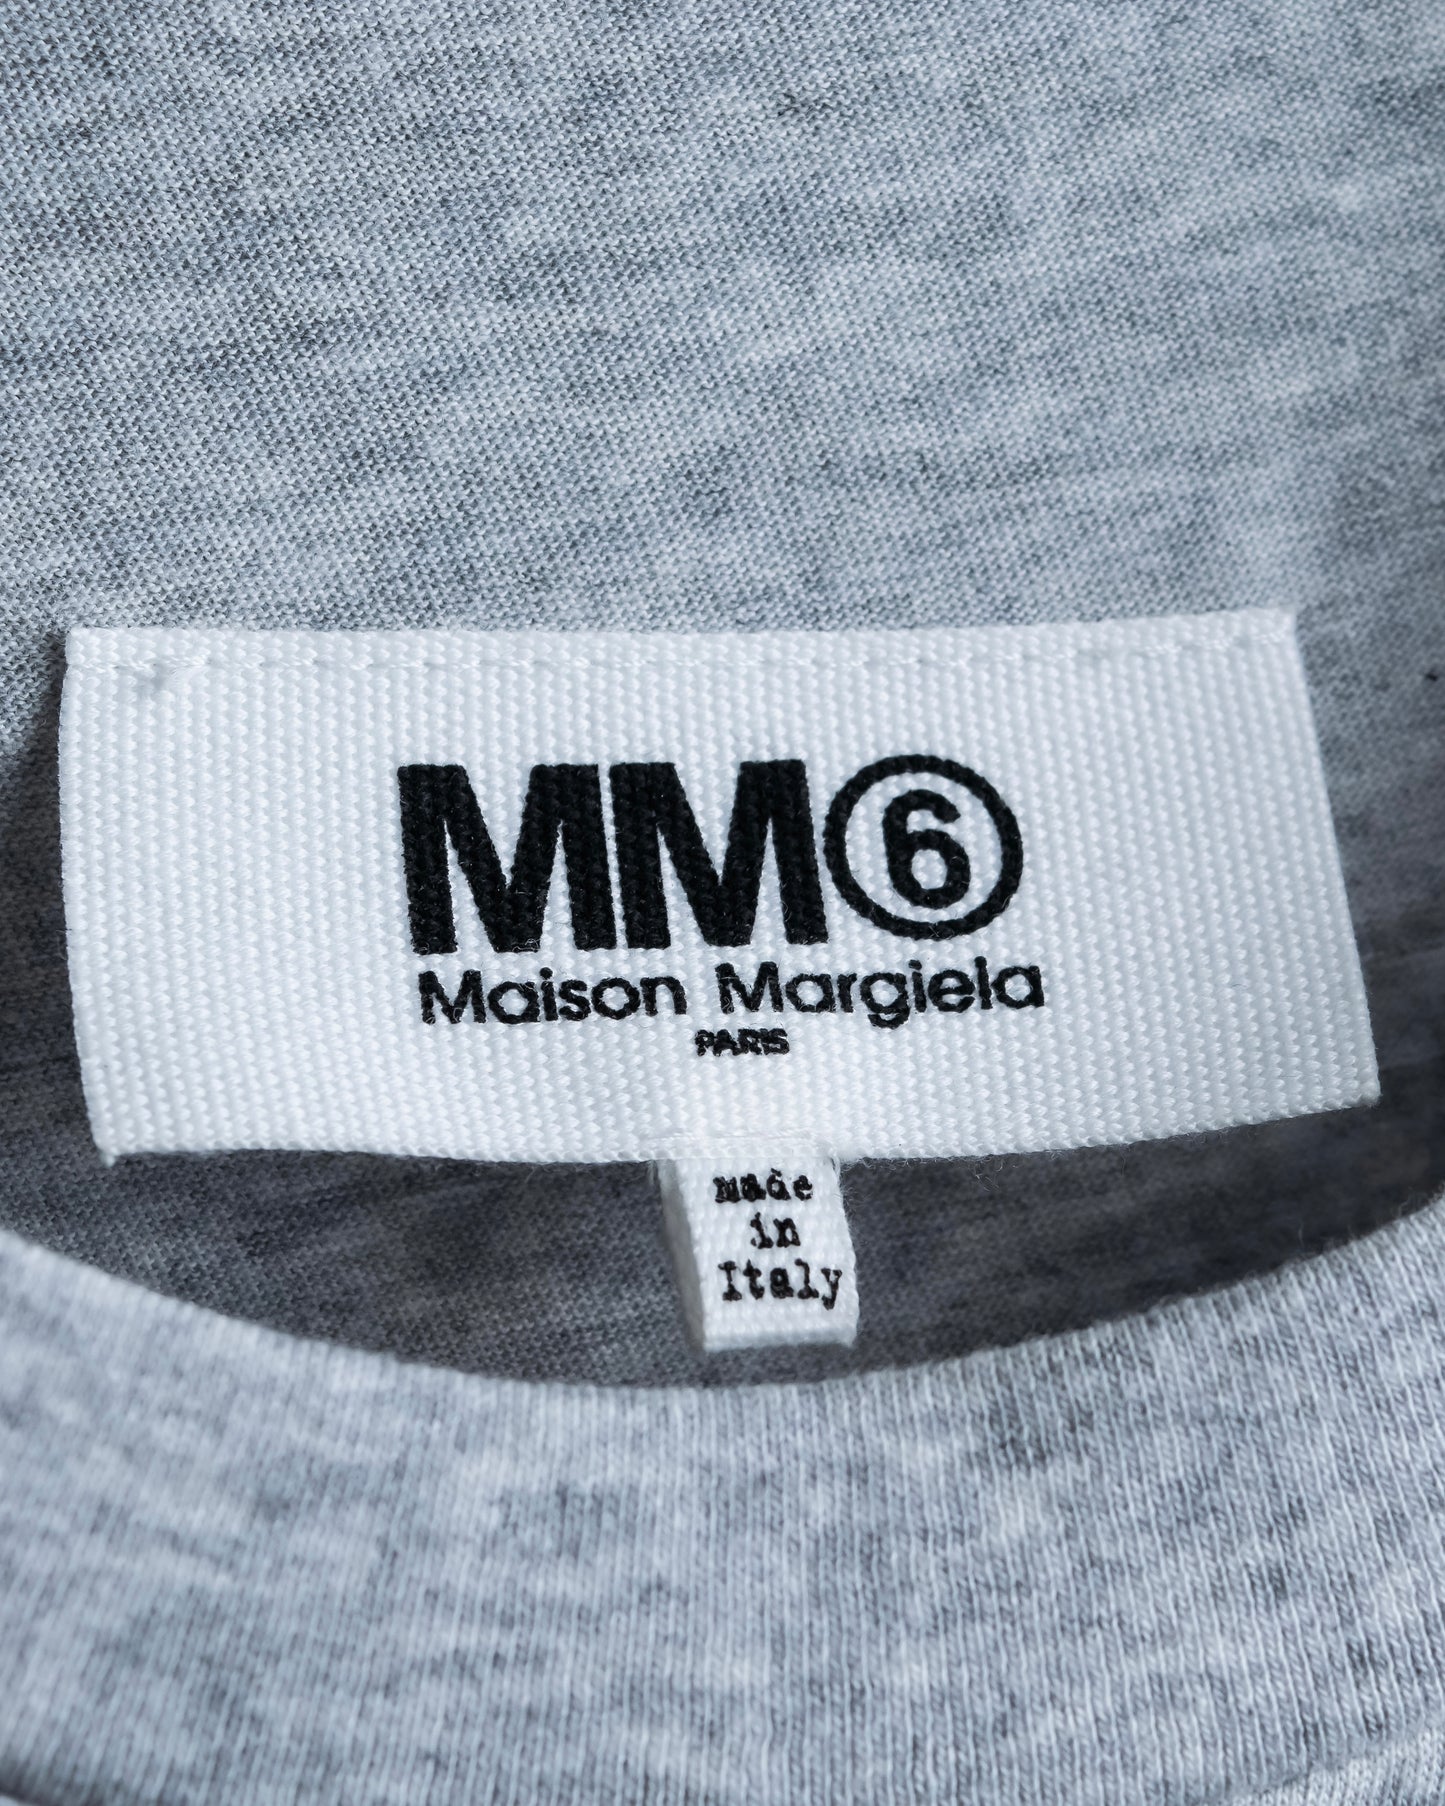 "MM6" Upside down long dress